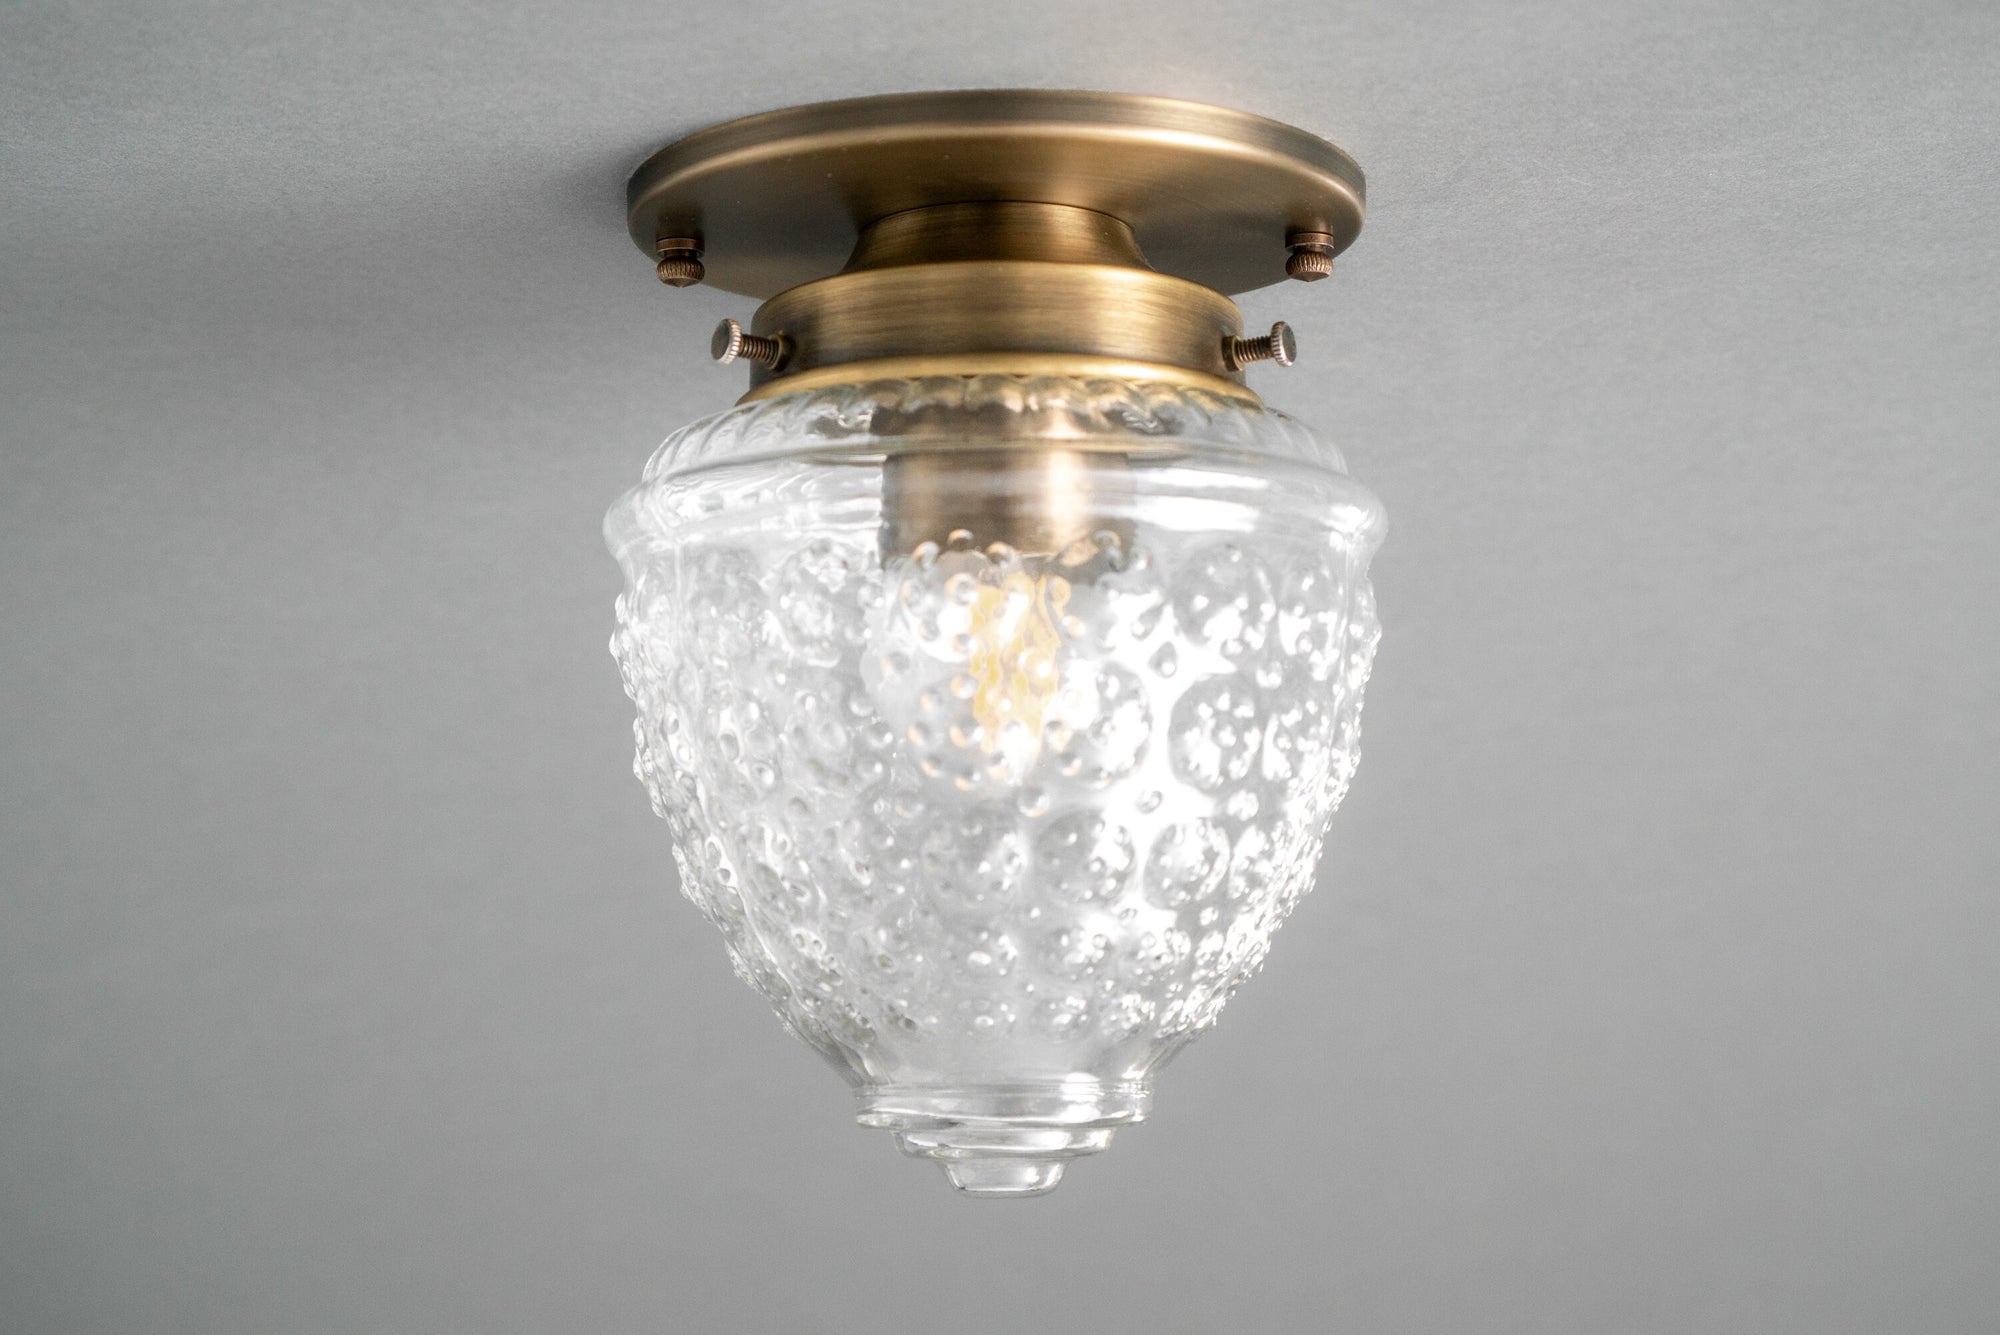 Antique Brass Crystal Globe Chandelier, LightFixturesUSA